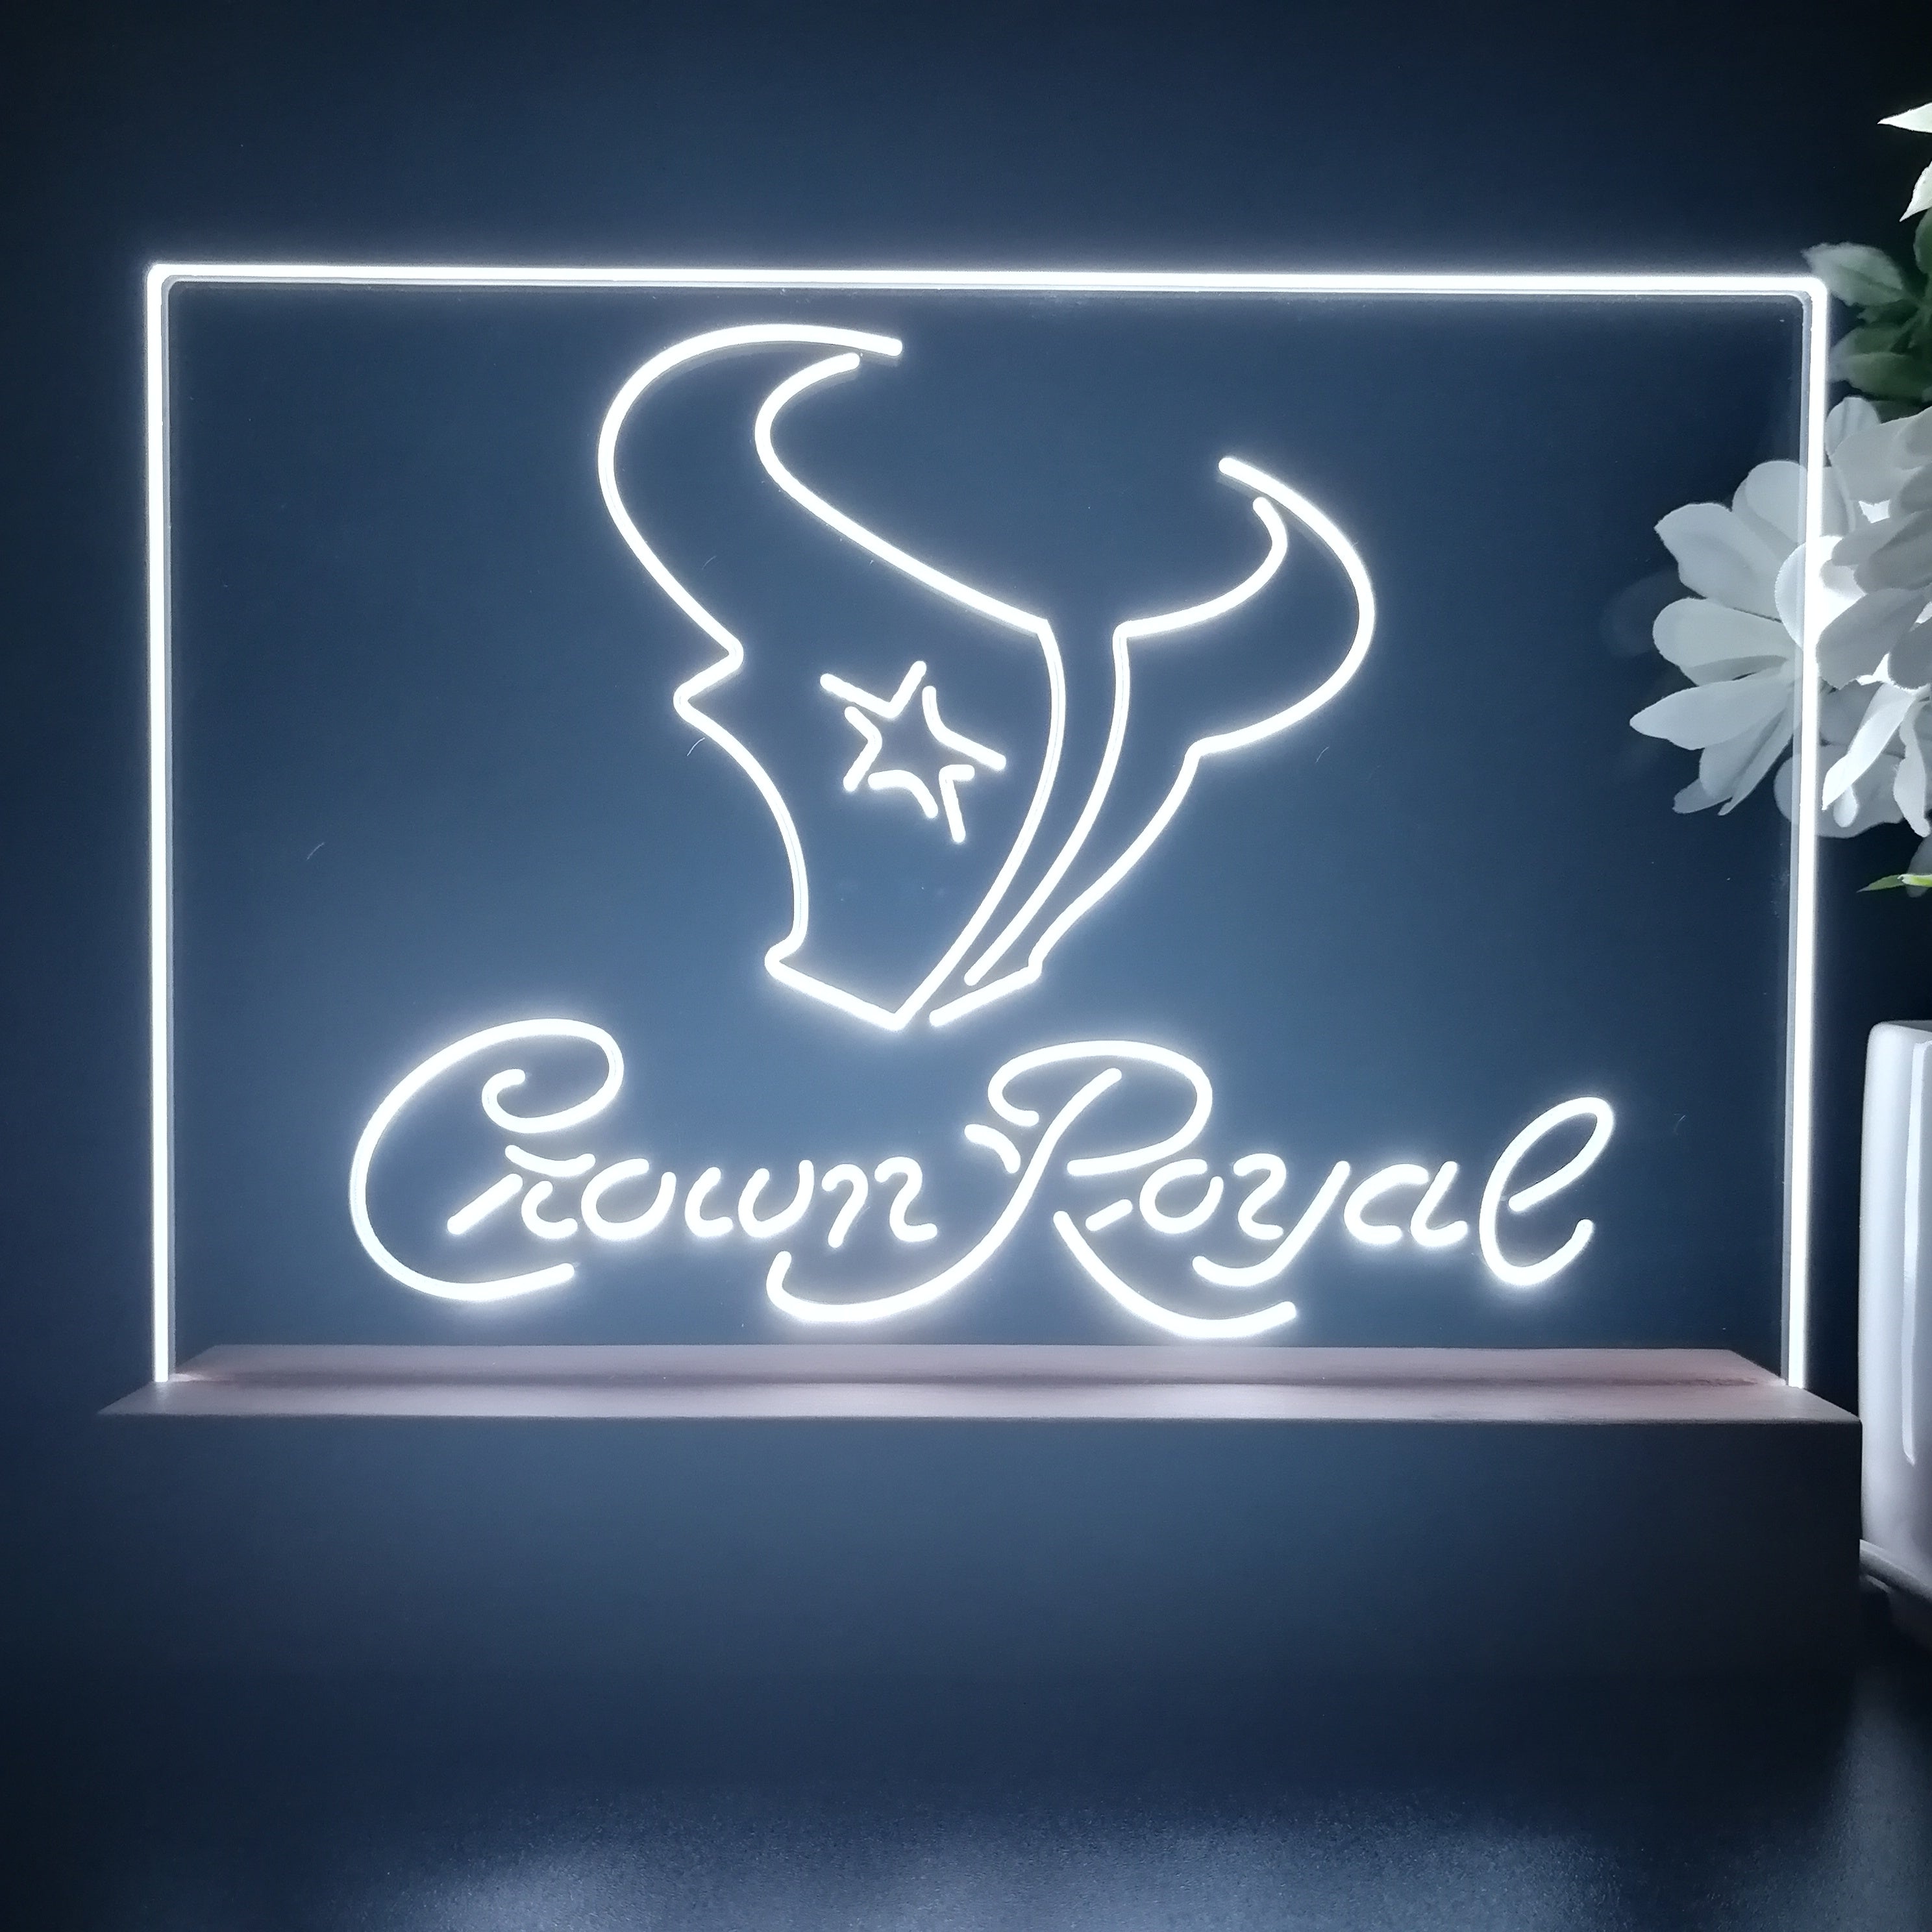 Crown Royal Bar Houston Texans Est. 2002 Night Light Pub Bar Lamp